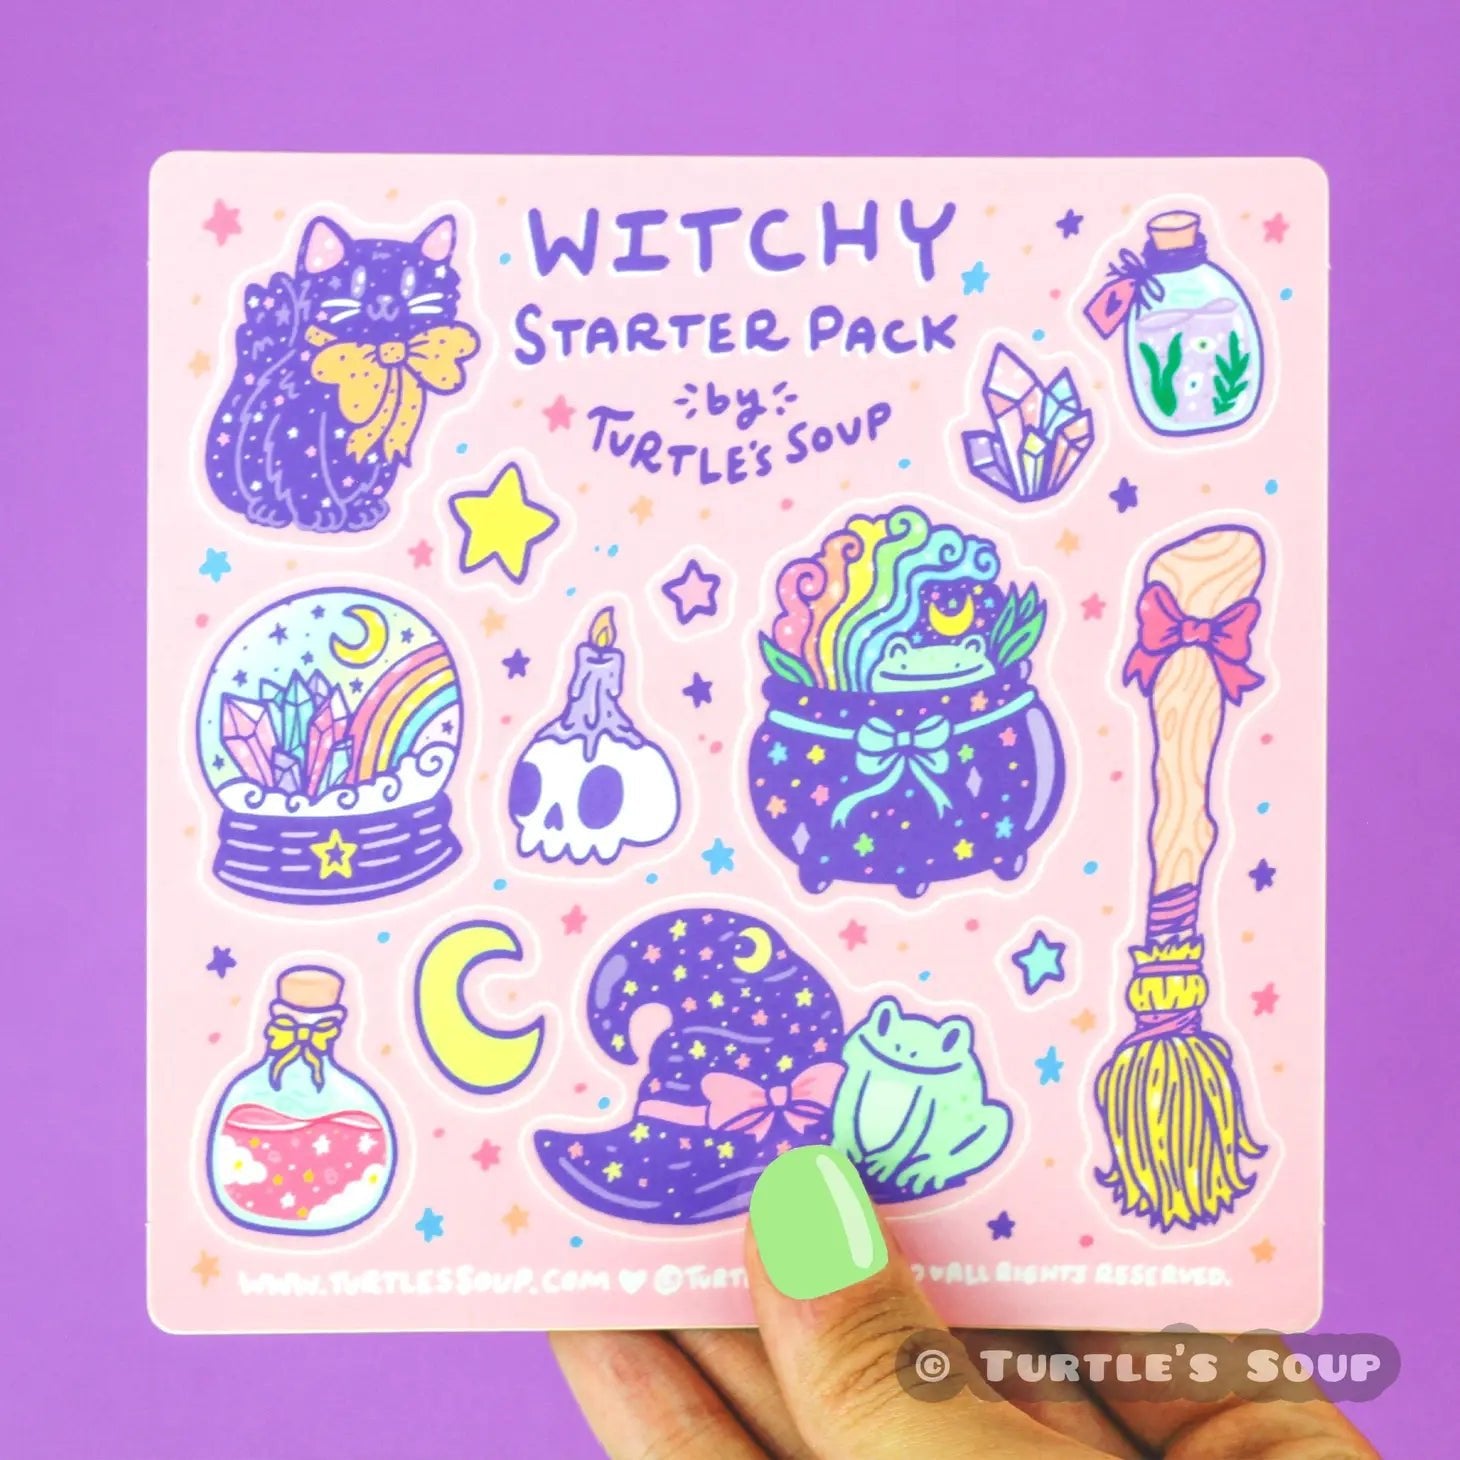 Witchy Starter Pack Vinyl Sticker Sheet - The Mystics Club